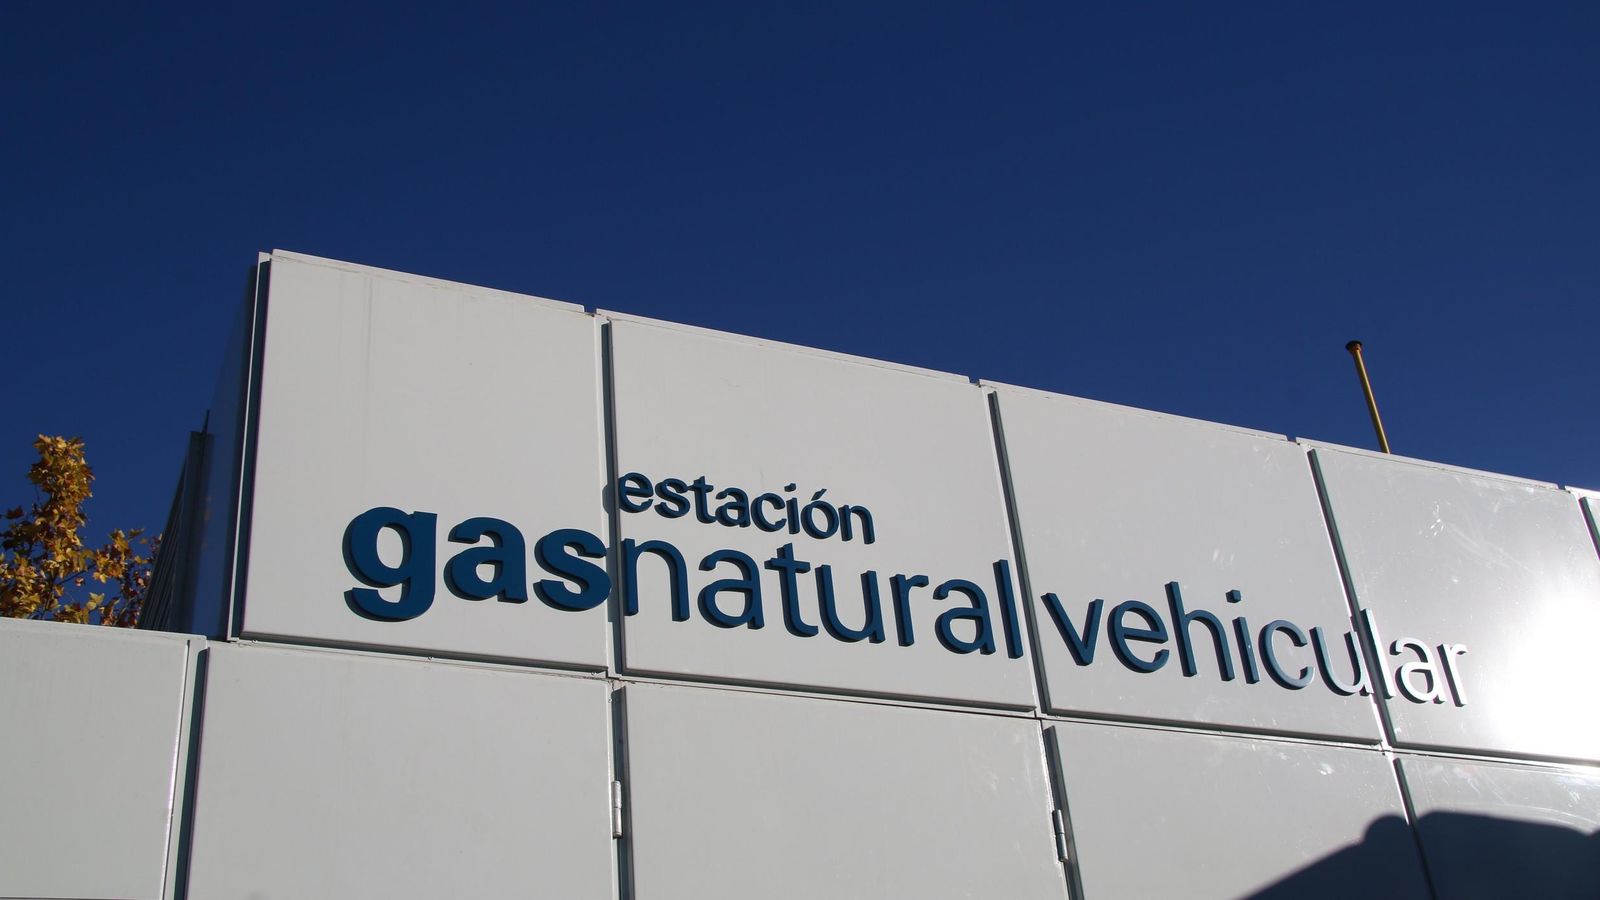 Foto: Gas natural vehicular, una buena alternativa